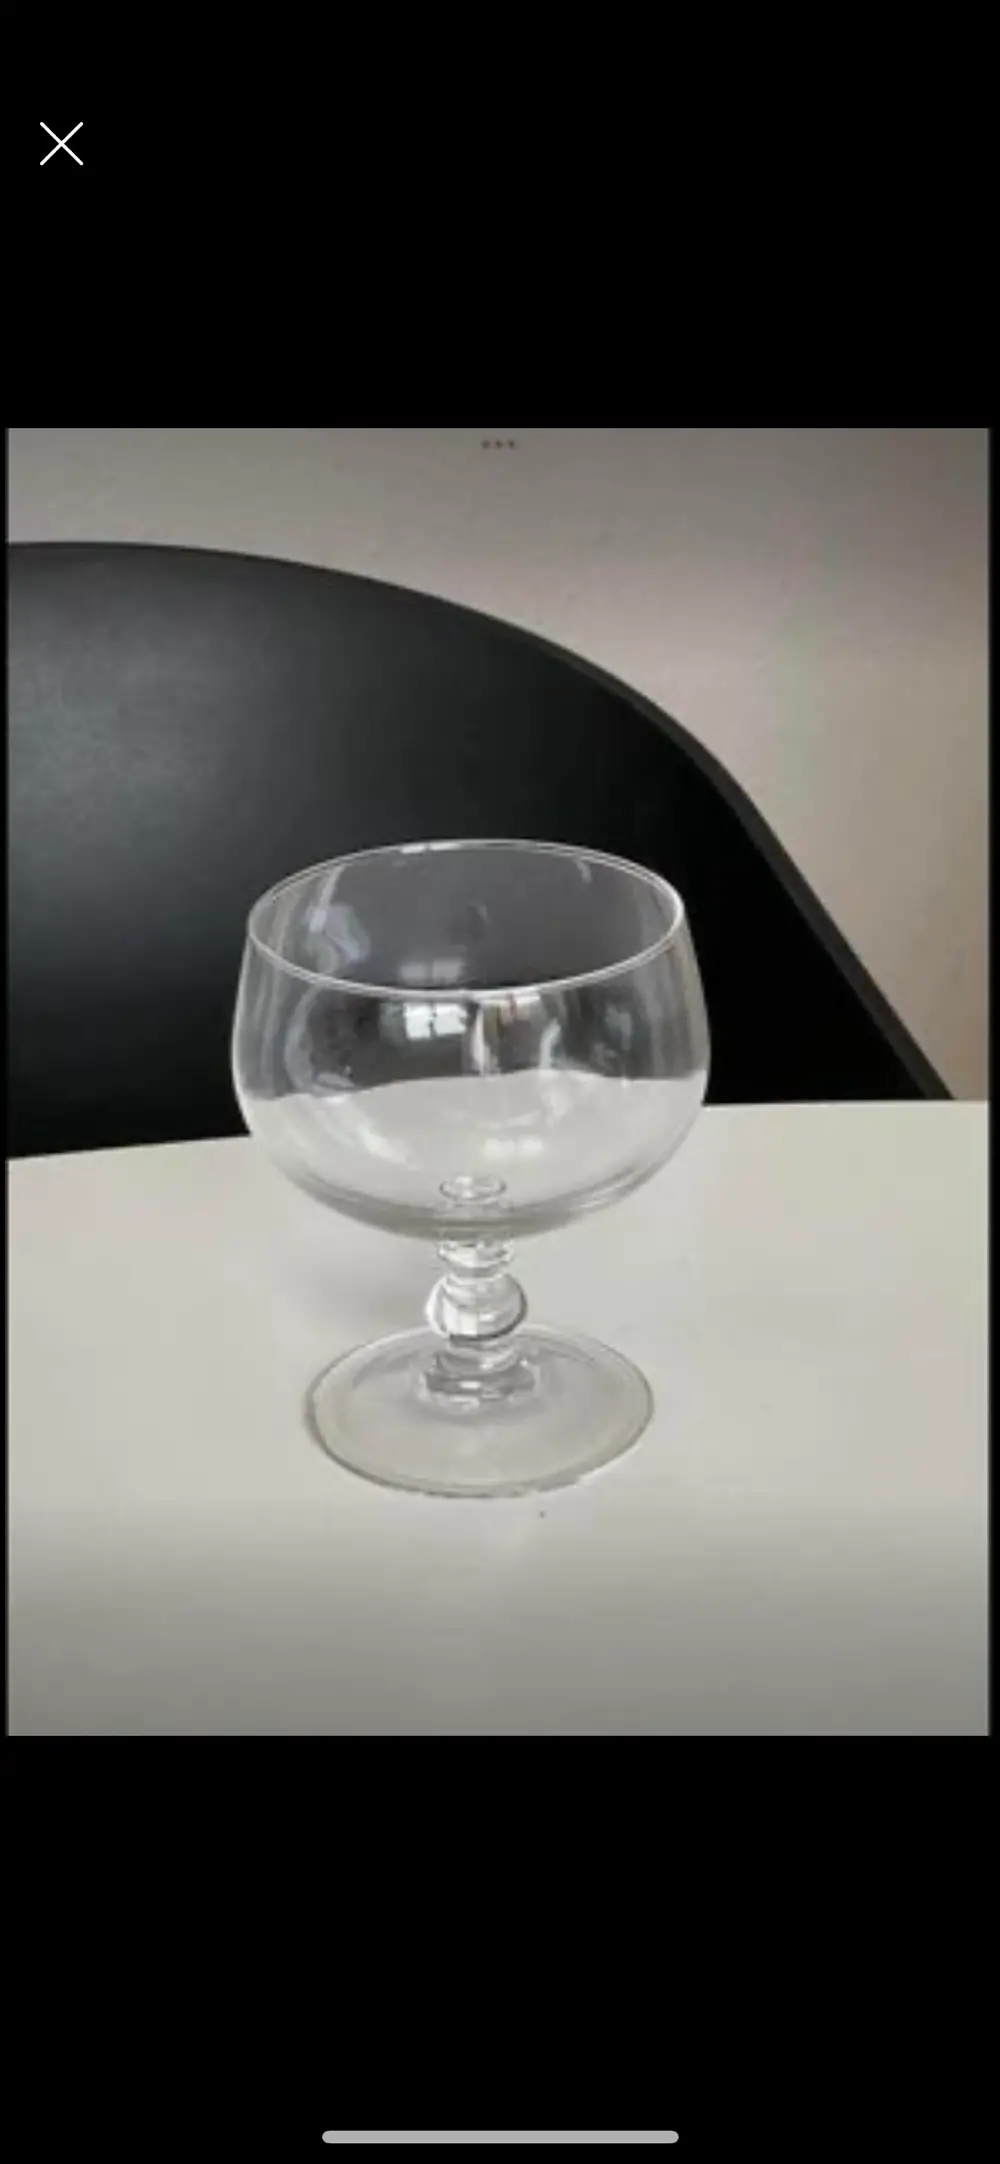 Luminarc Cocktail glas